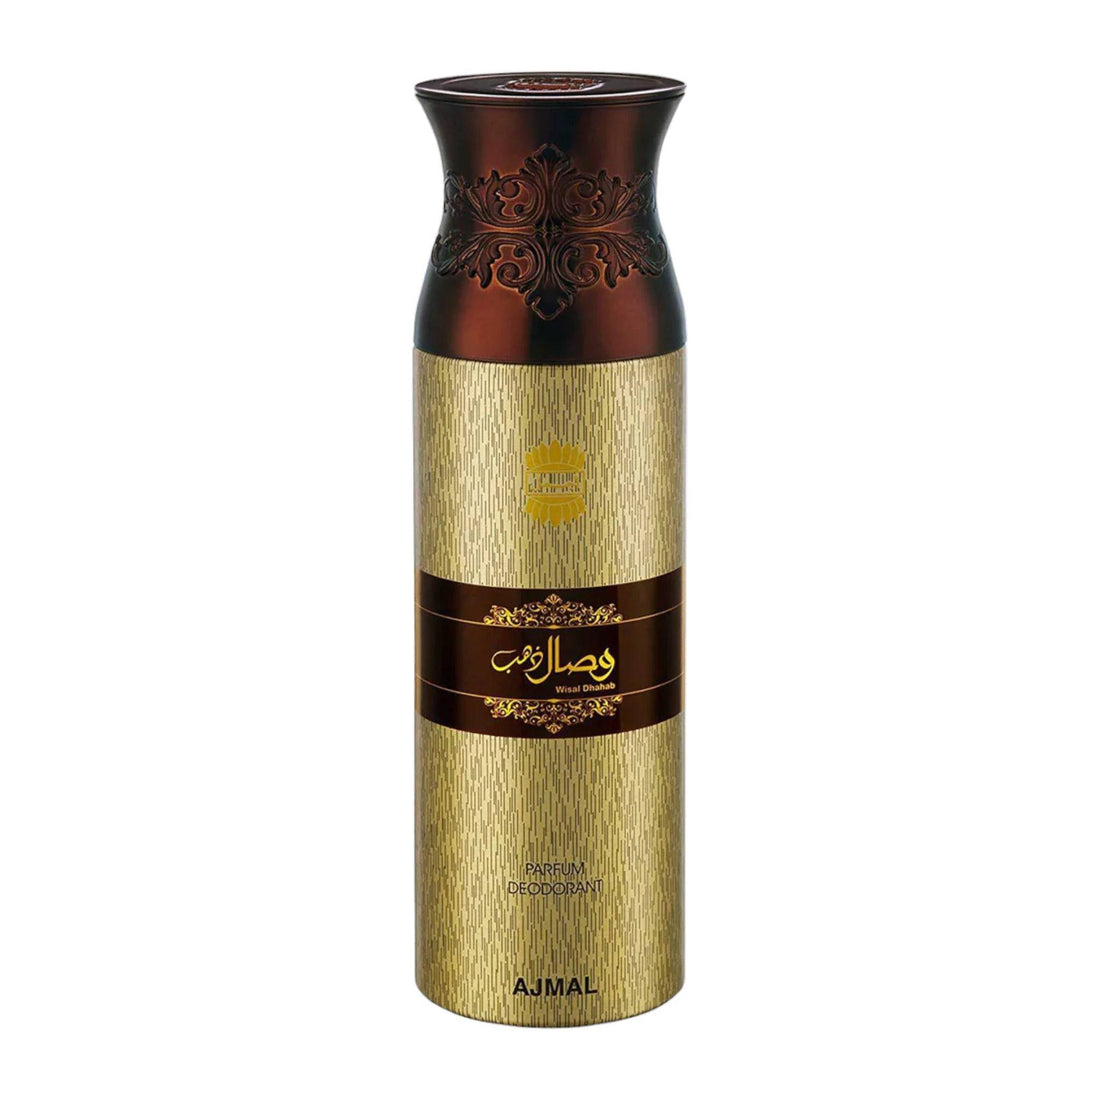 Image of Ajmal Wisal Dhahab Deodorant Bottle - "Elegant gold-toned deodorant bottle."